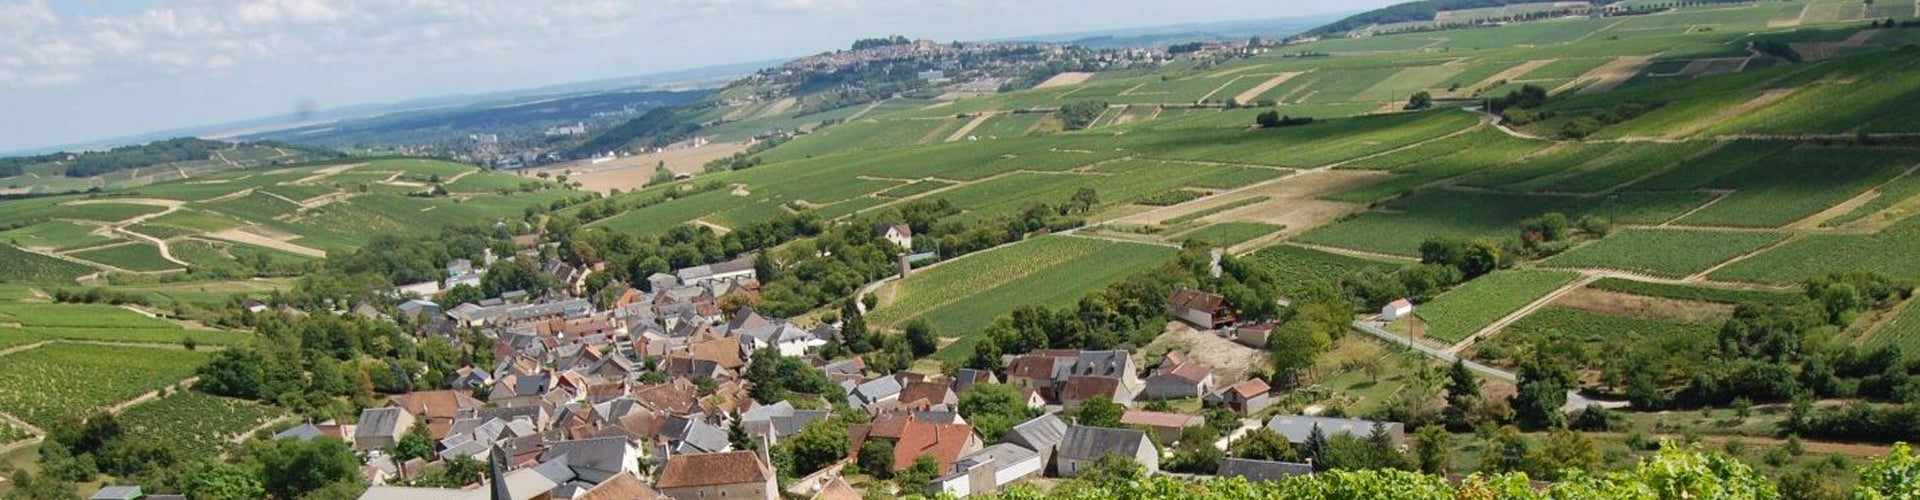 Cotat vineyards in Chavignol, Sancerre